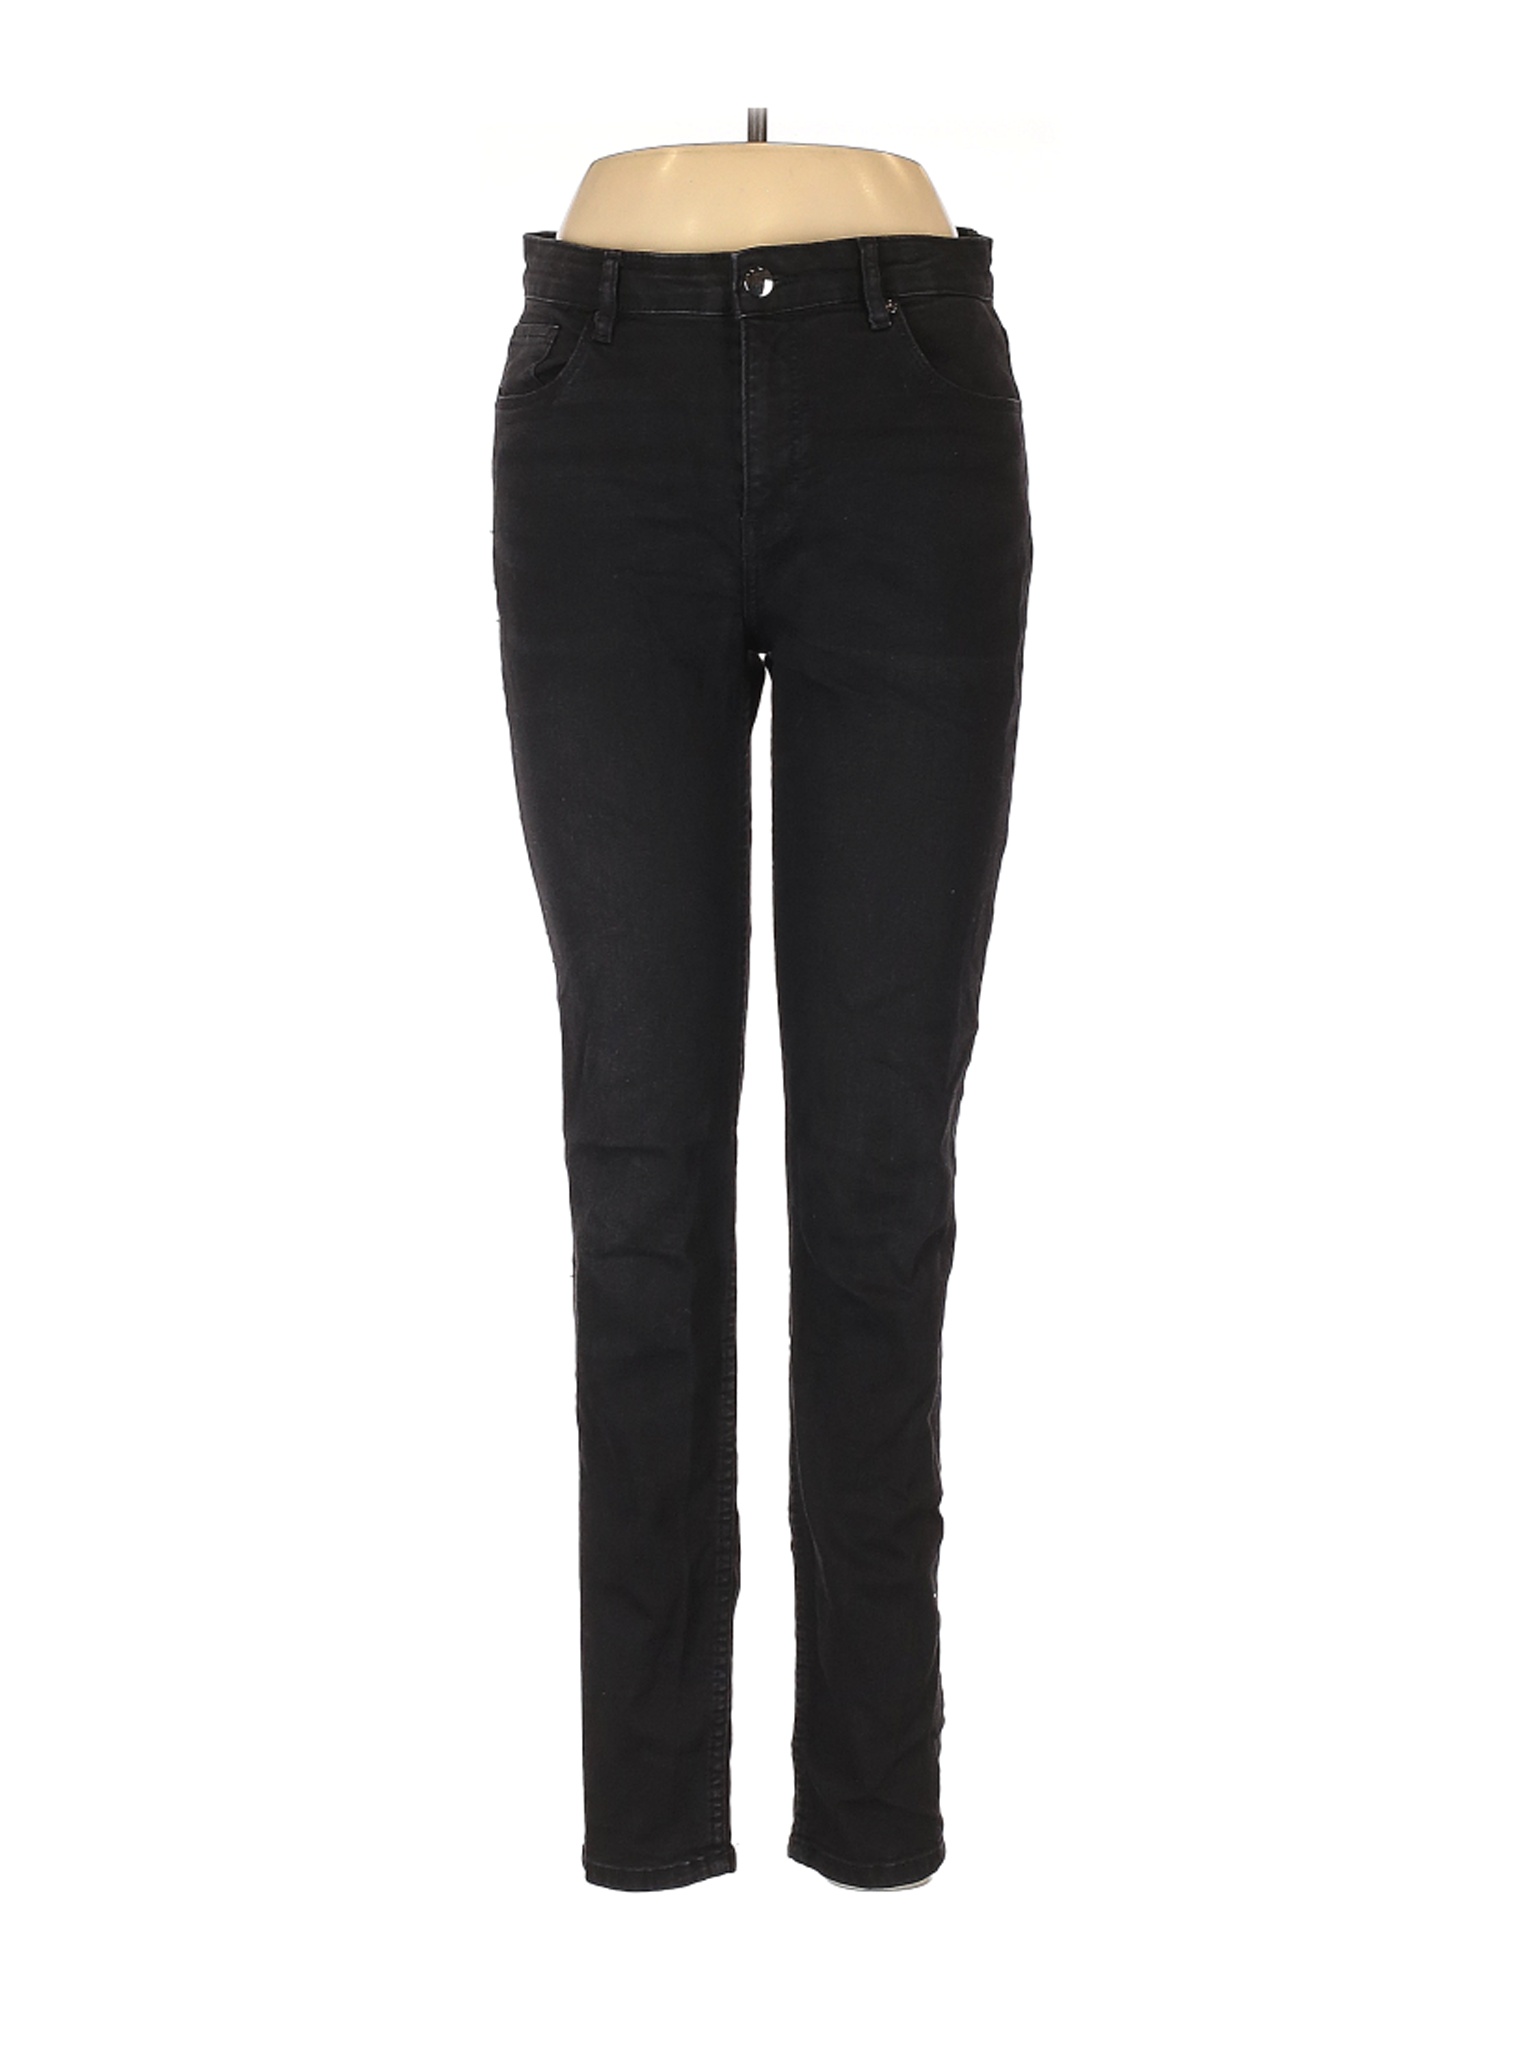 H&M Women Black Jeans 8 | eBay